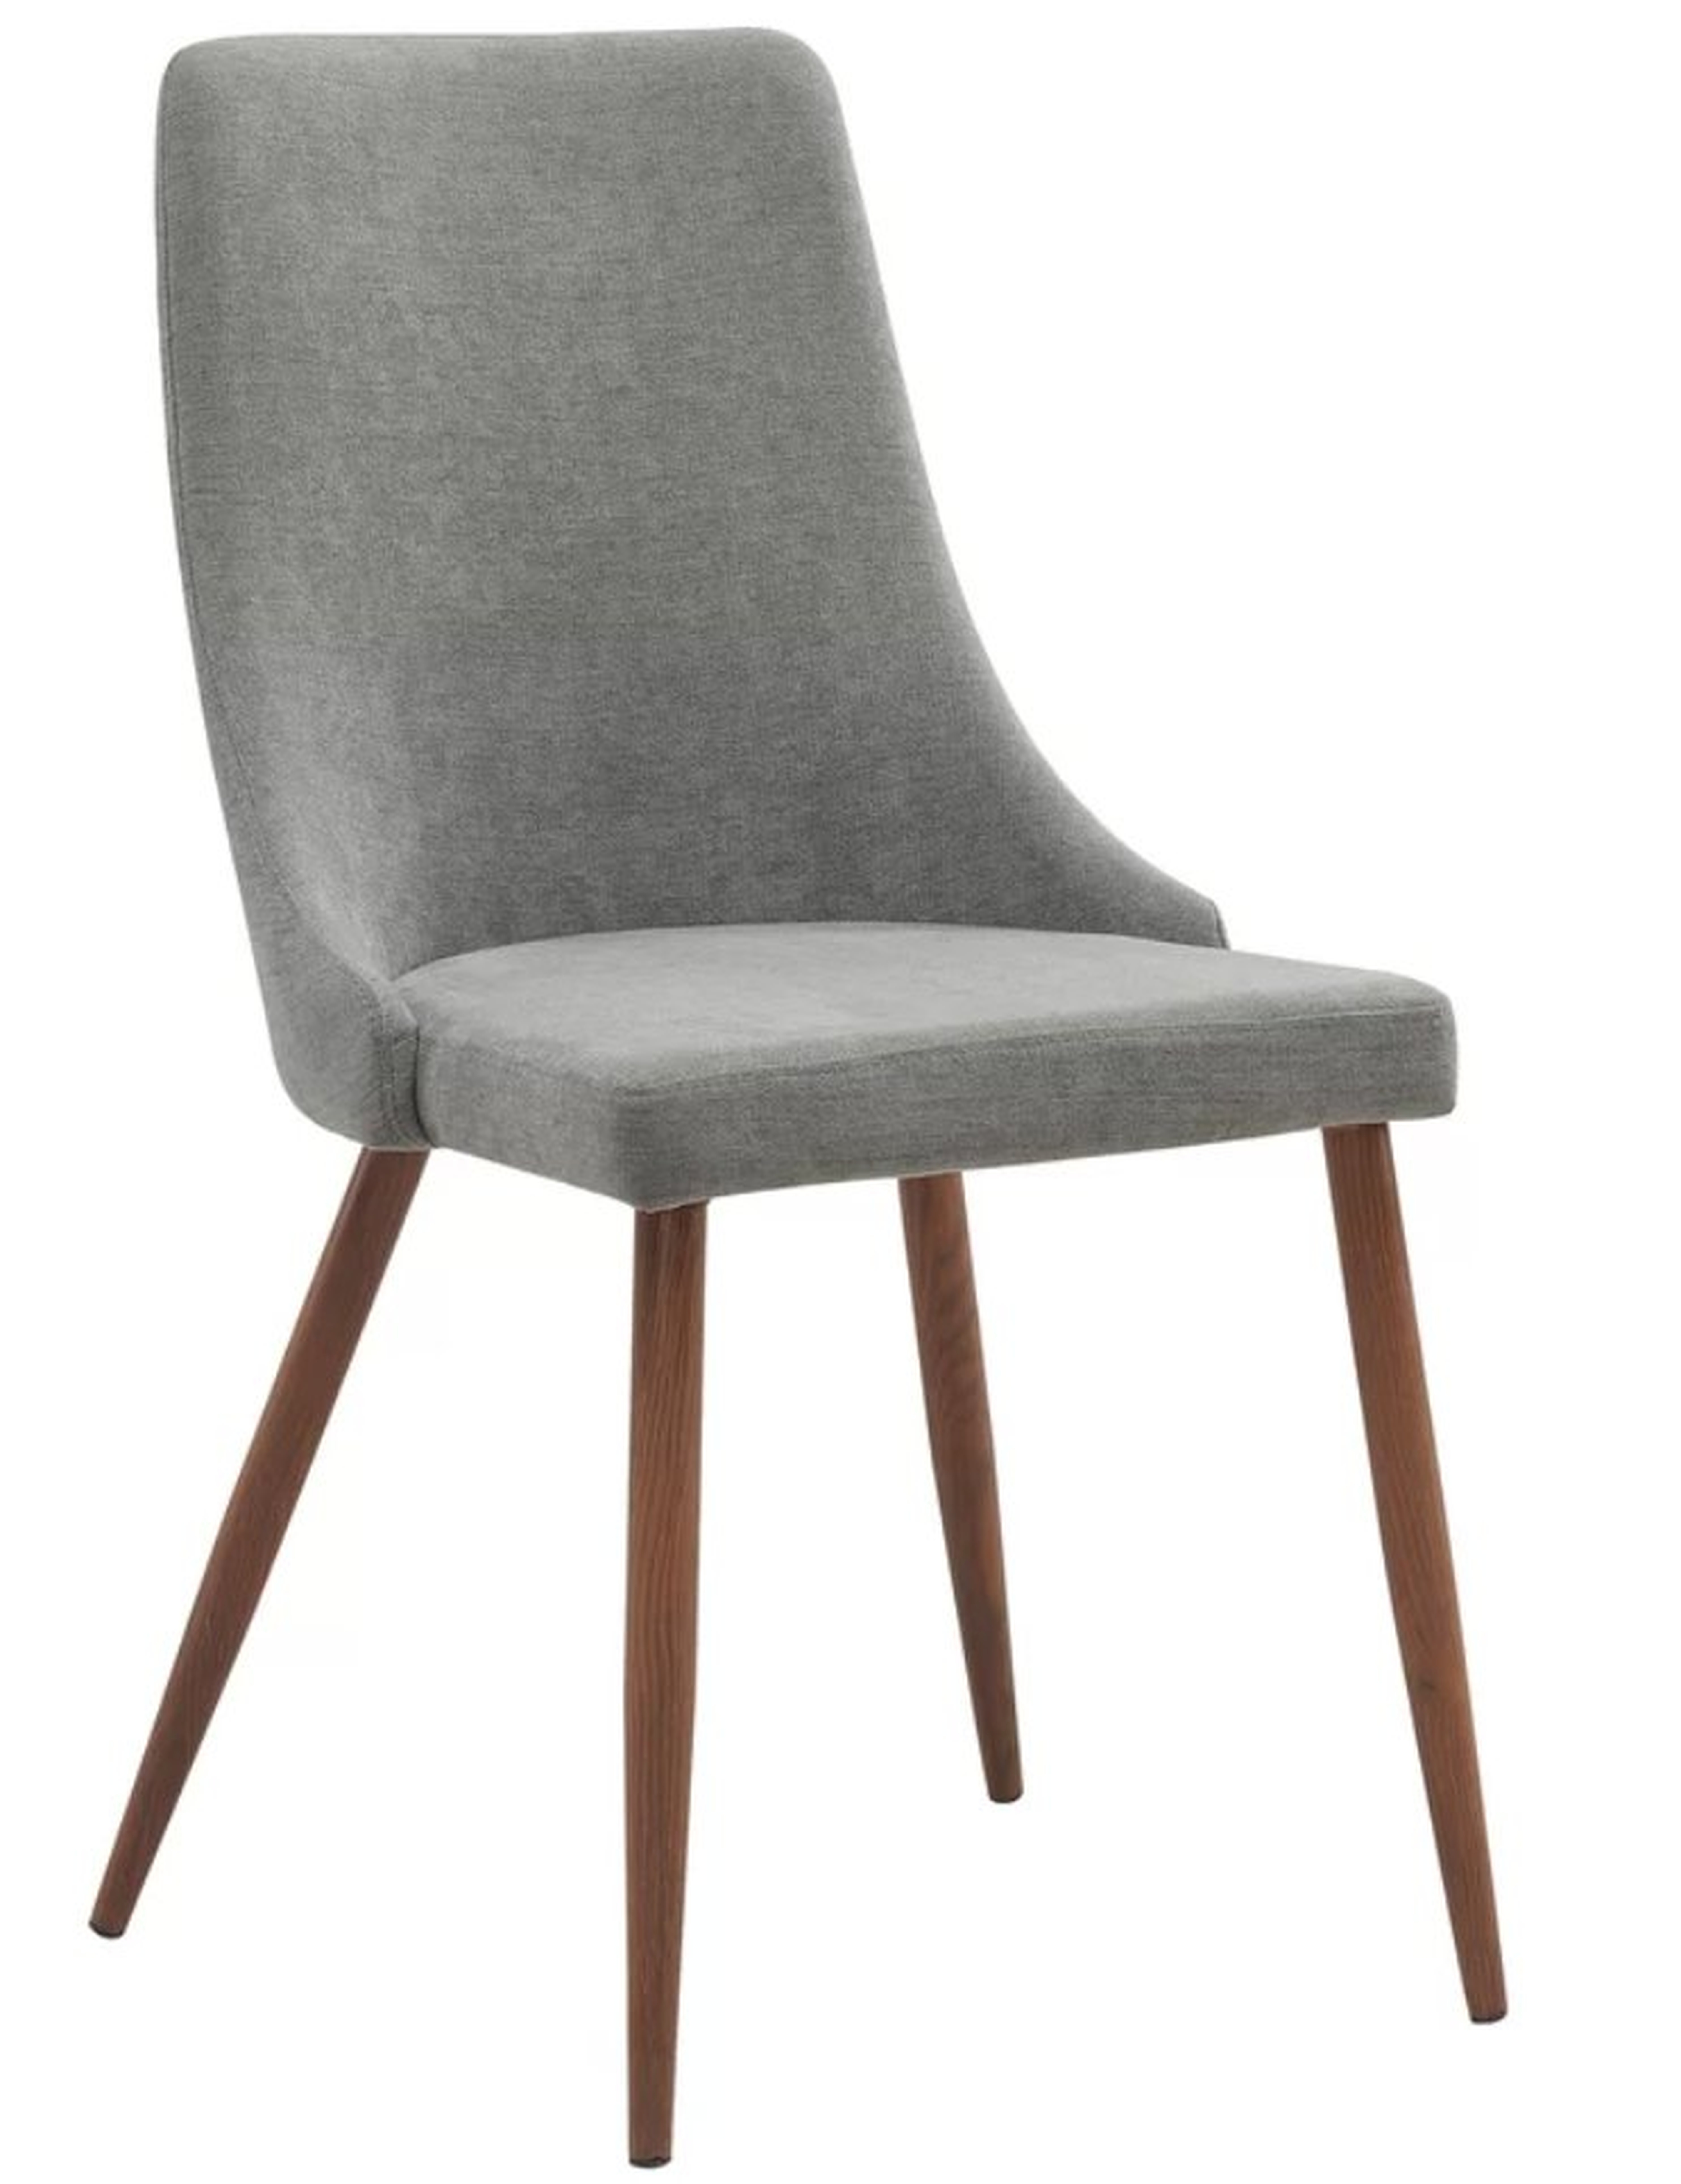 Blaise Upholstered Dining Chair (Set of 2) - Wayfair